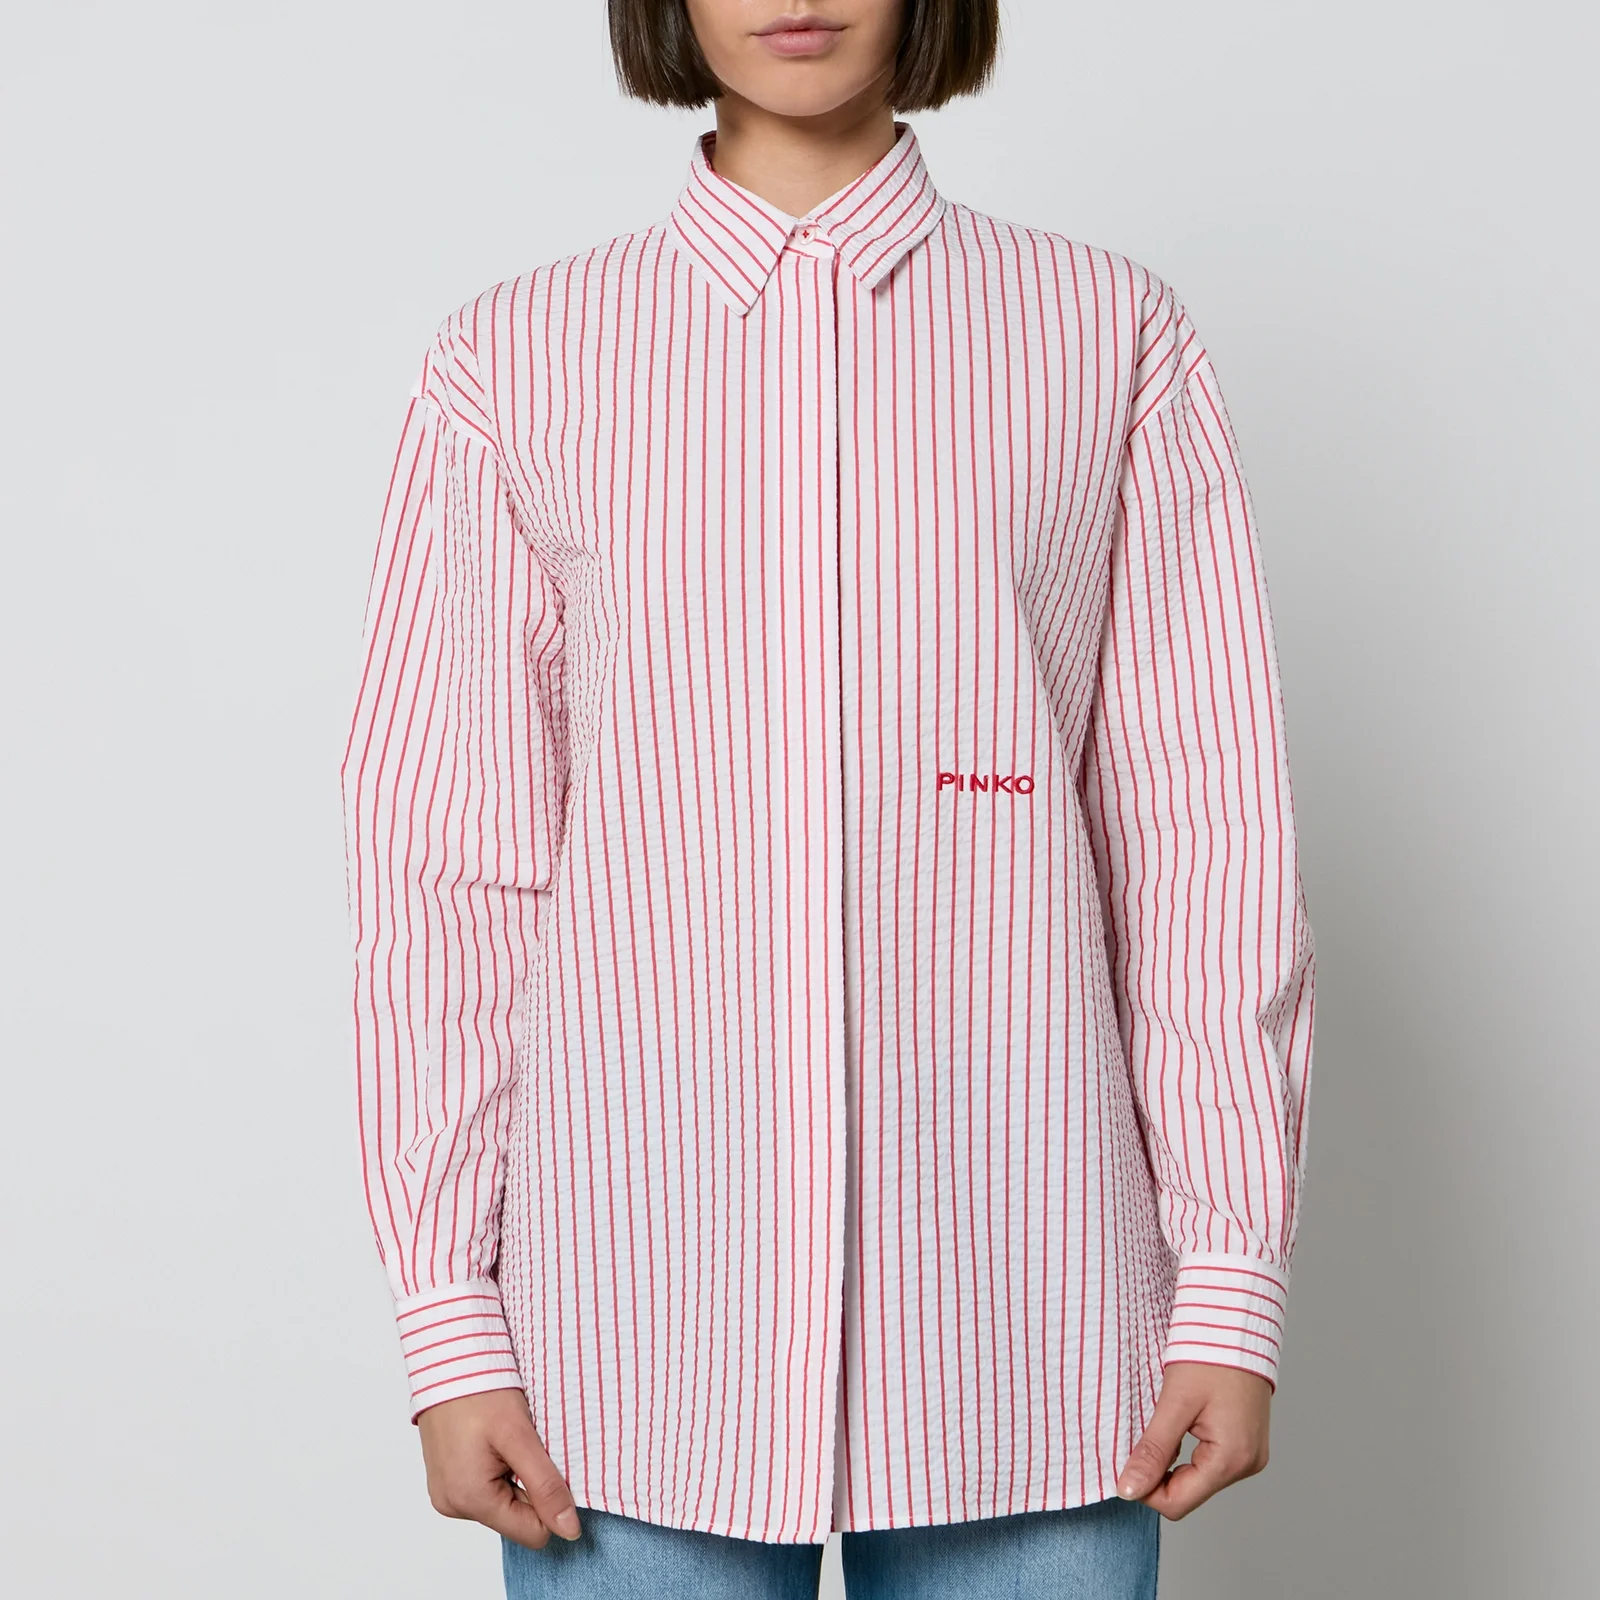 Pinko Bridport 1 Rigato Striped Seersucker Shirt - S Image 1